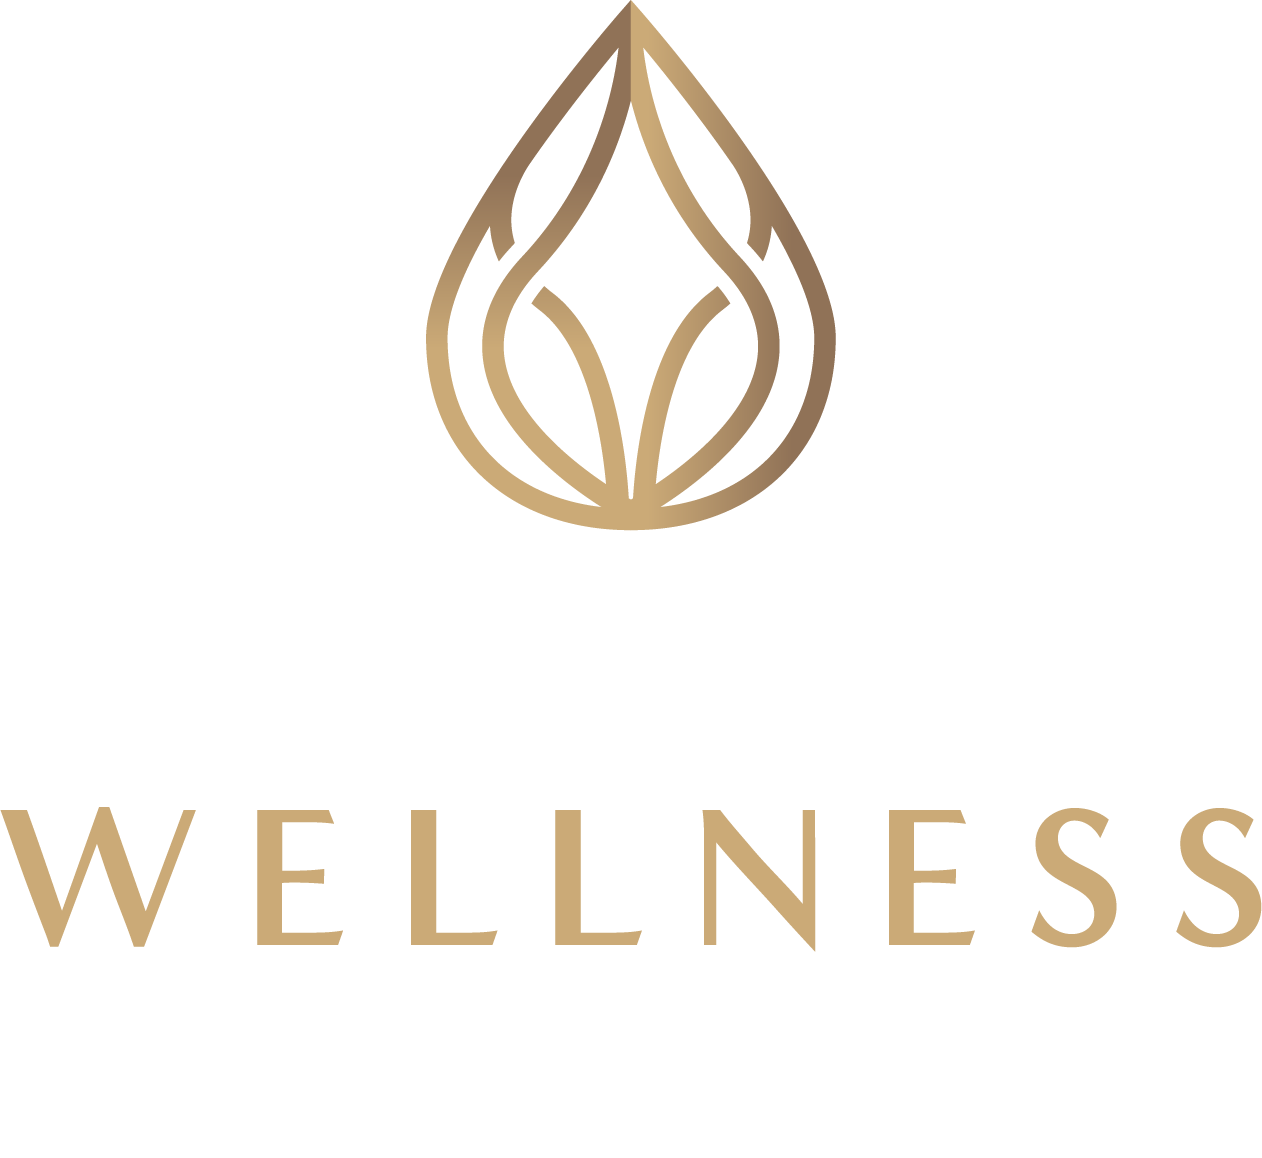 Shrewsbury Wellness Center